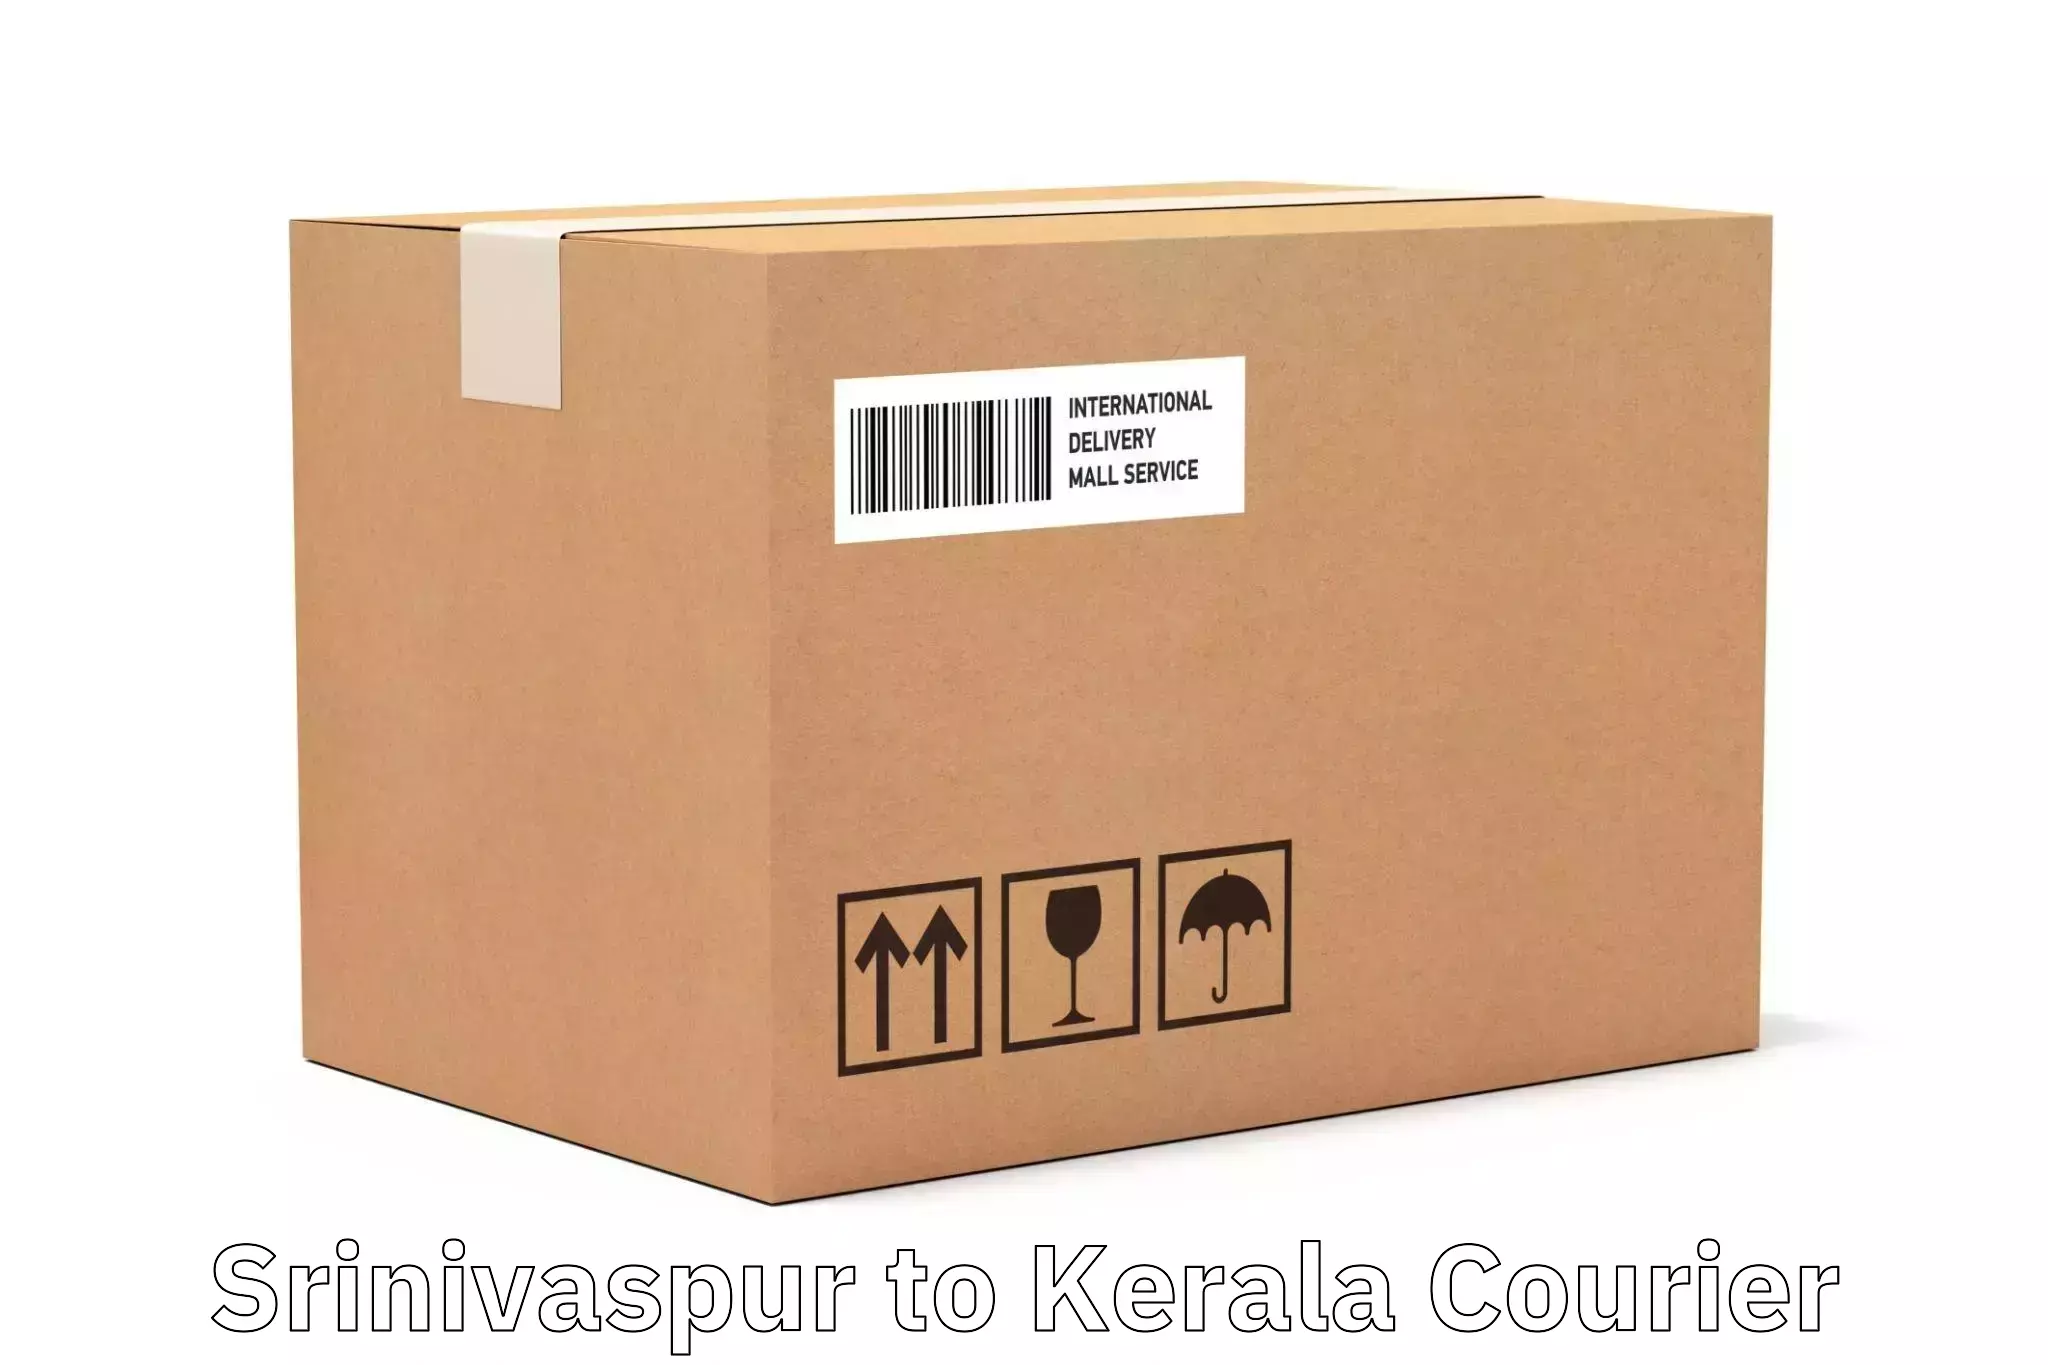 High-speed parcel service Srinivaspur to Cochin Port Kochi